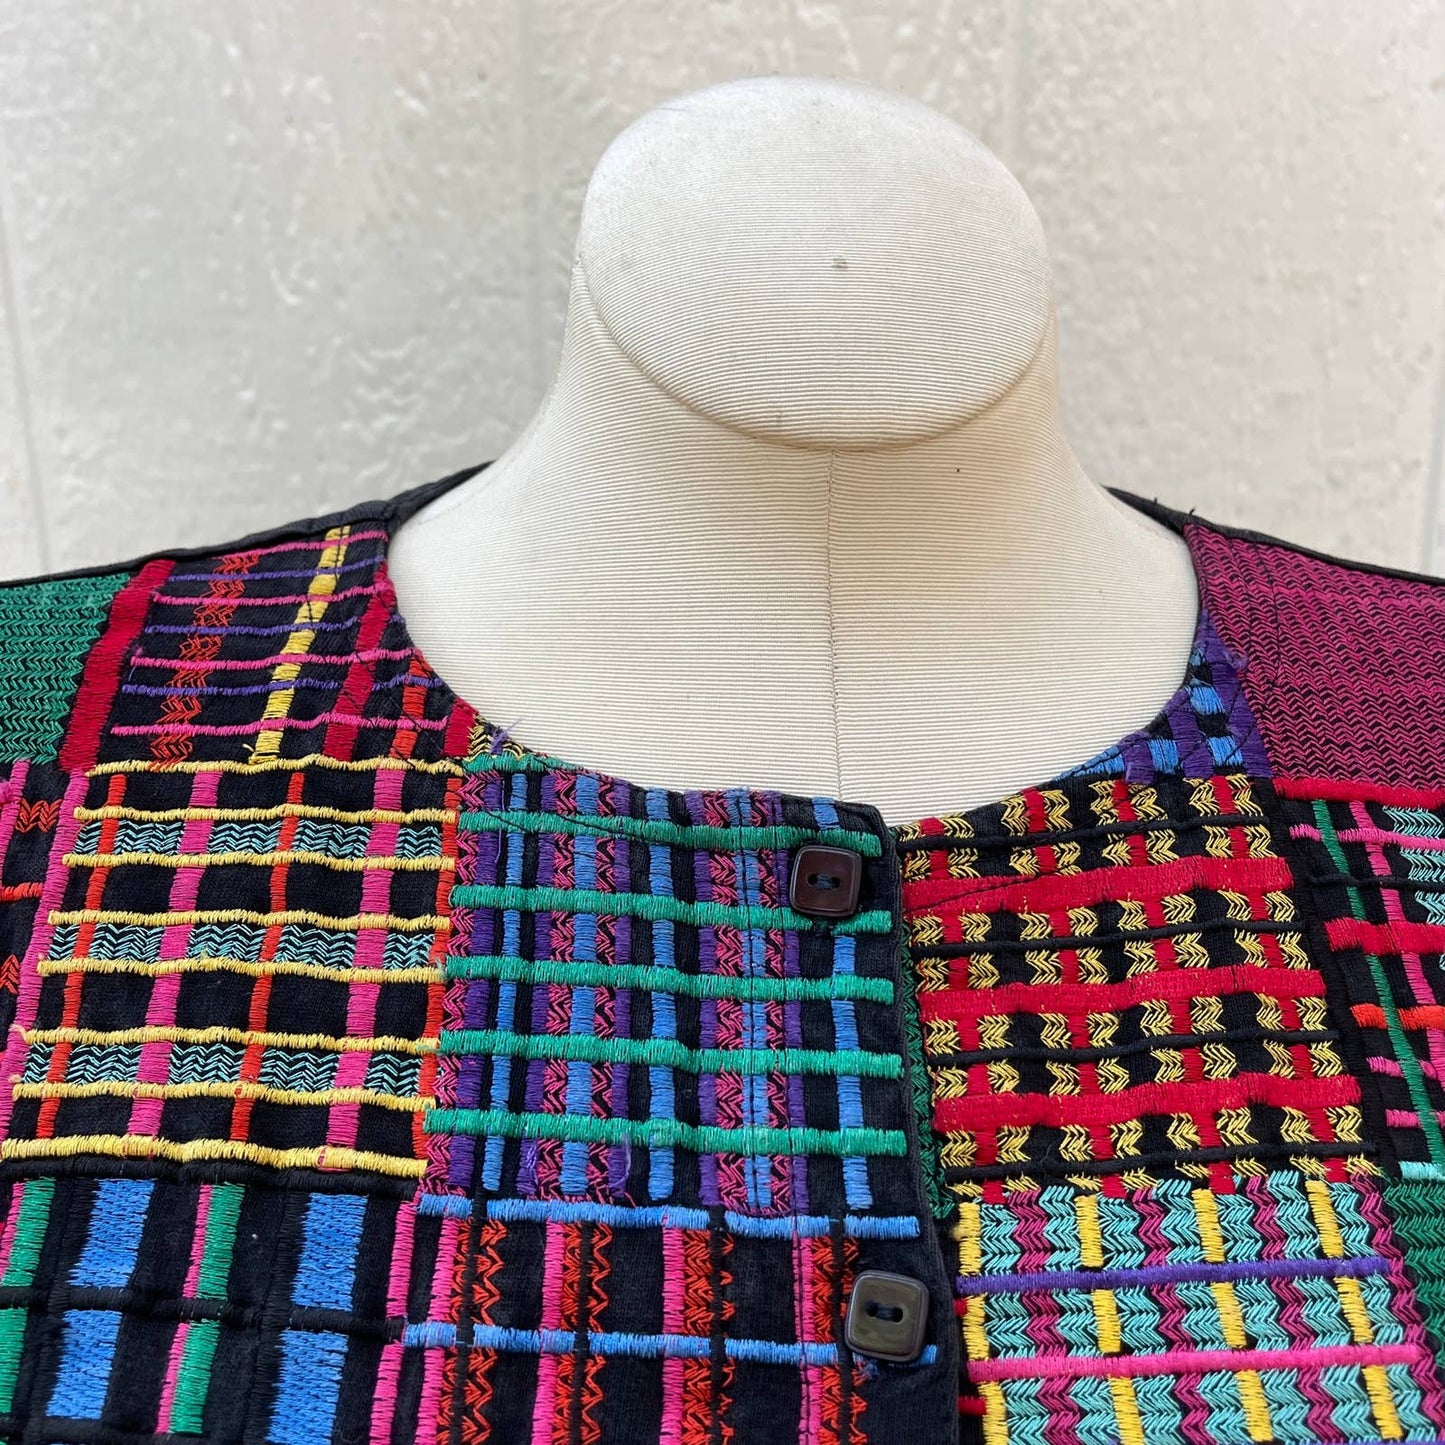 Vintage 90s Black Maxi Dress Colorful Embroidery Long Sleeves Michael Simon Sz M